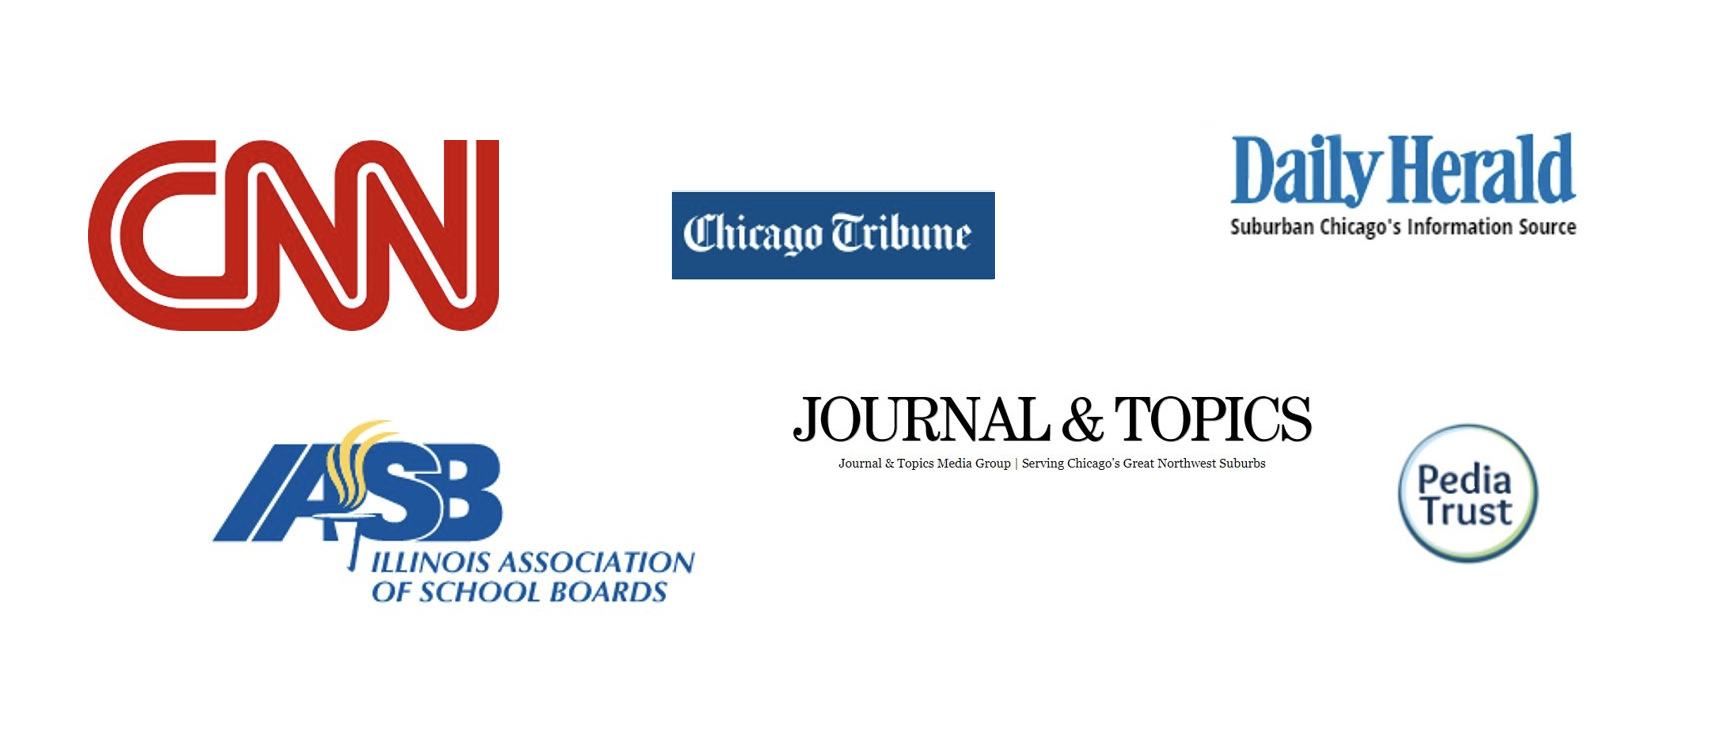 Logos of CNN, IASB, Chicago Tribune, Journal and Topics, Daily Herald, Pedia Trust